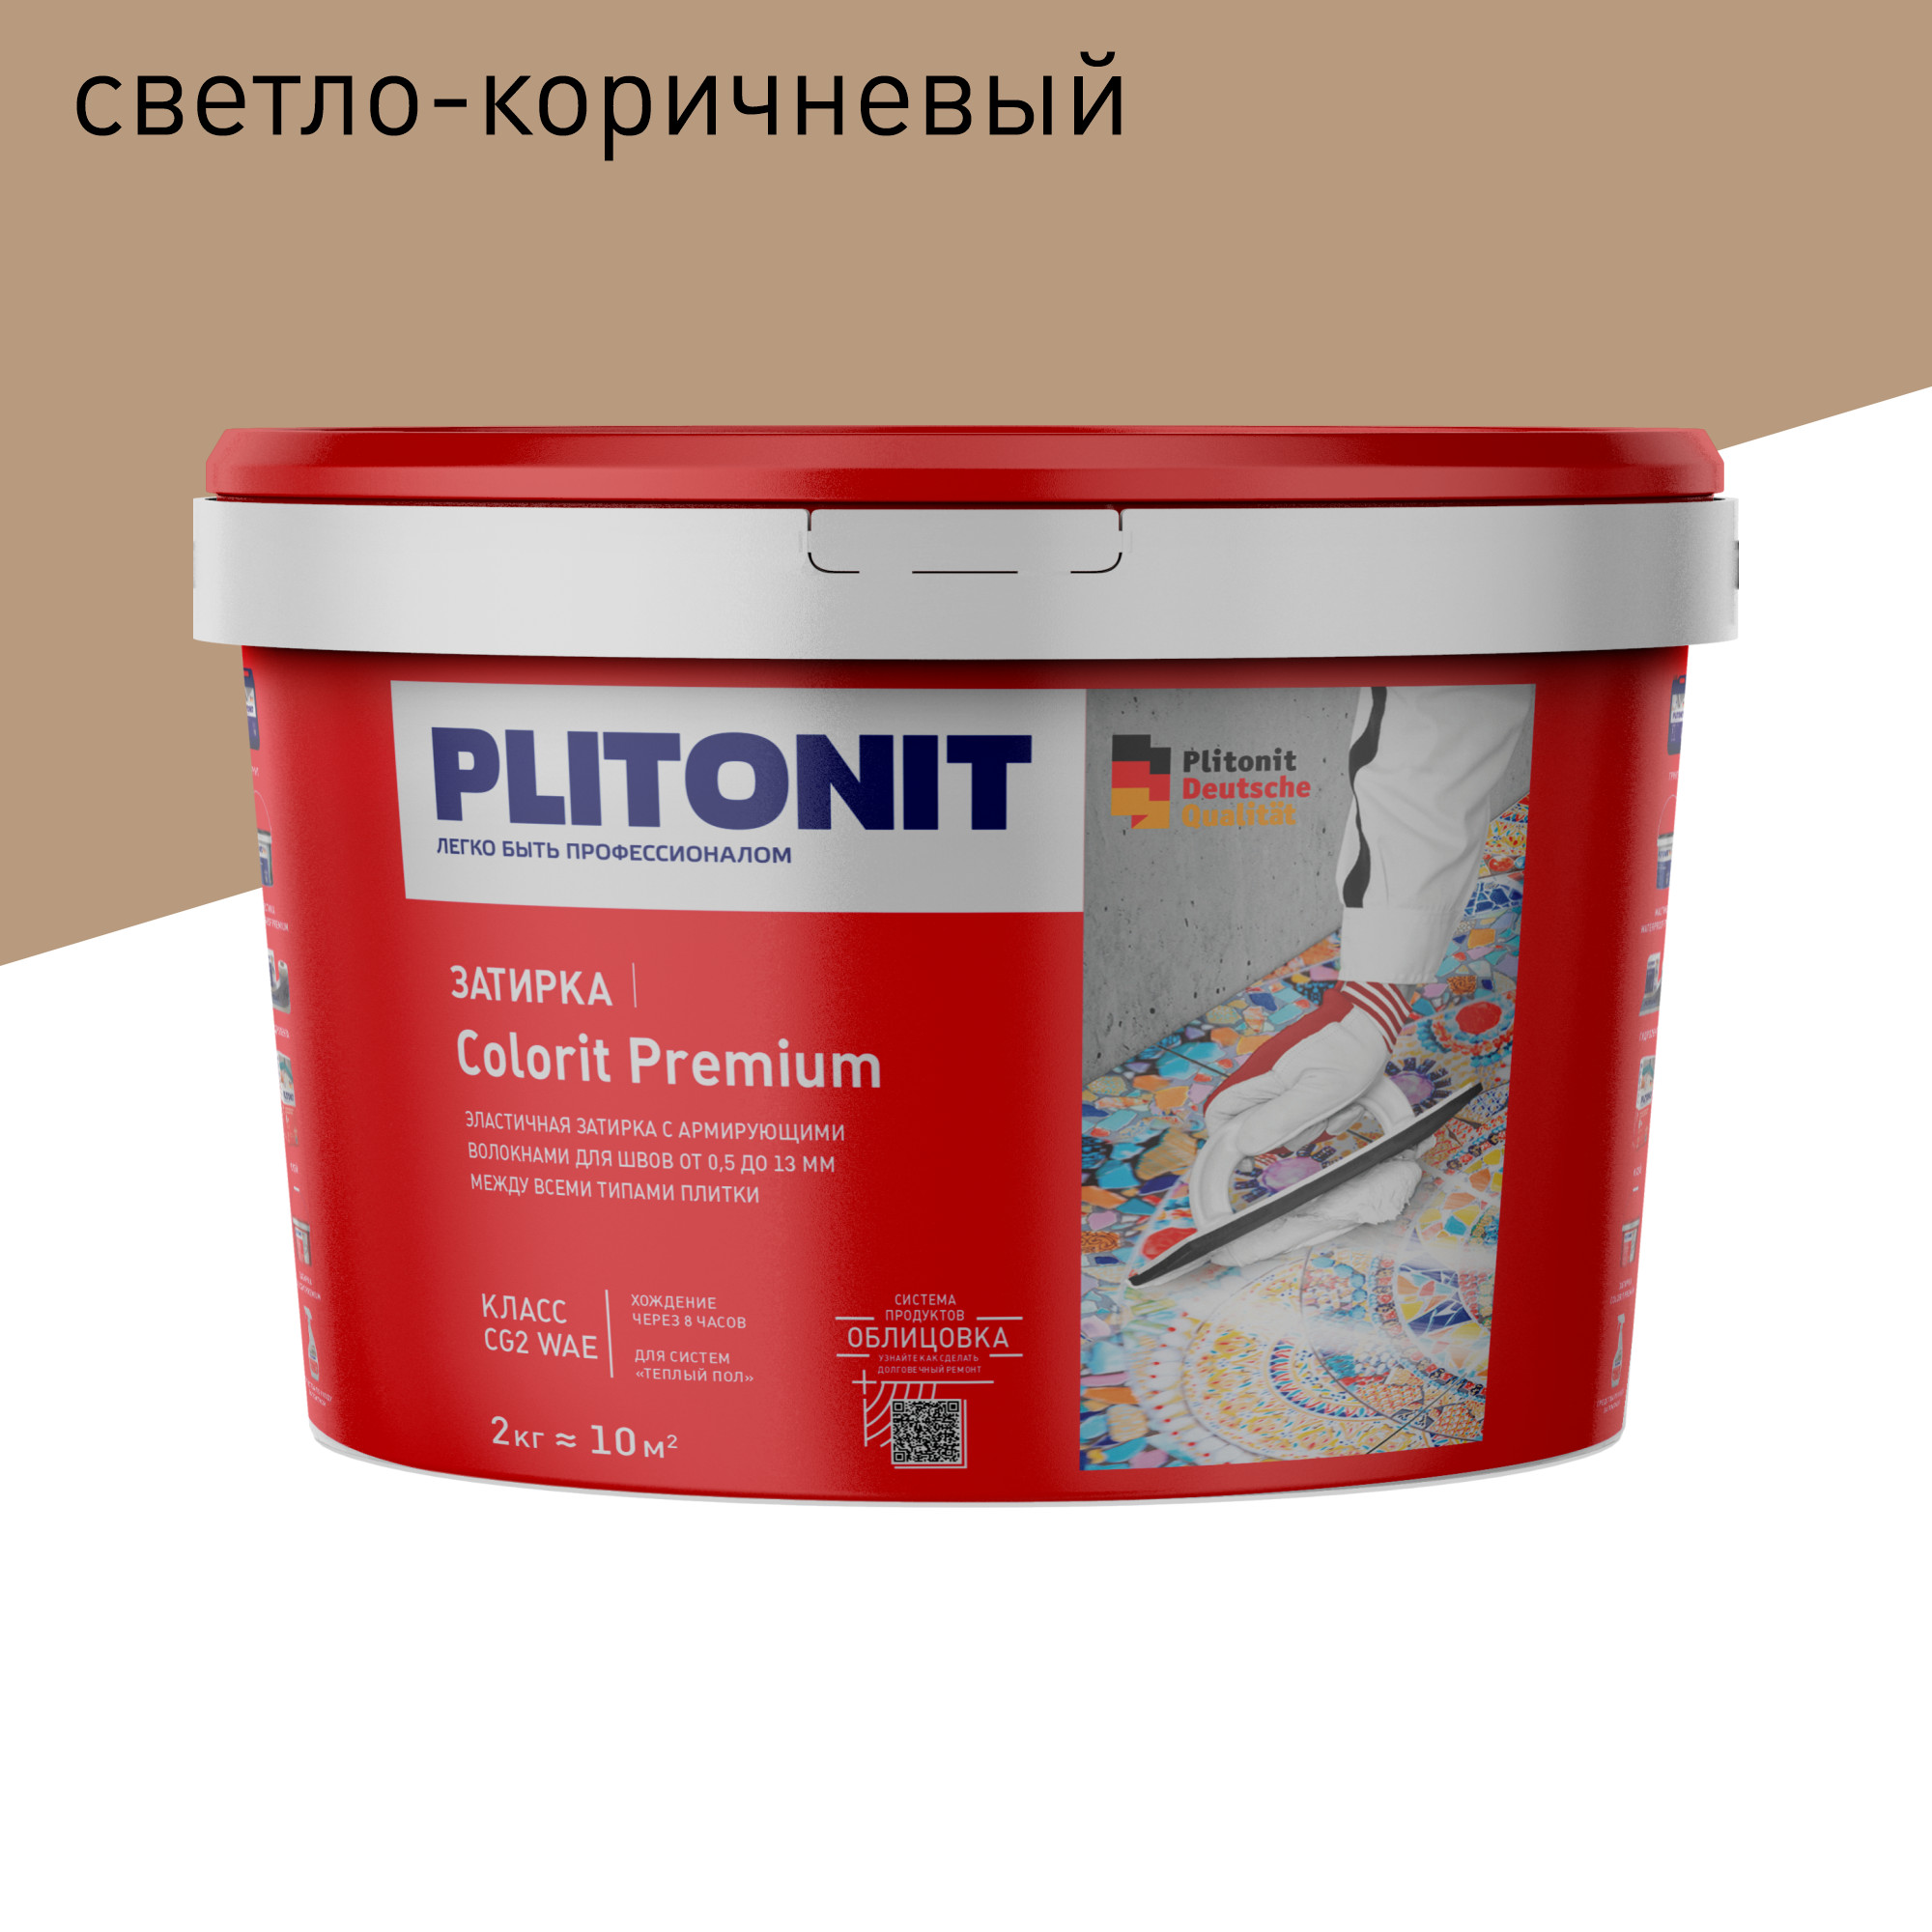 Затирка PLITONIT Colorit Premium светло-коричневая 2 кг